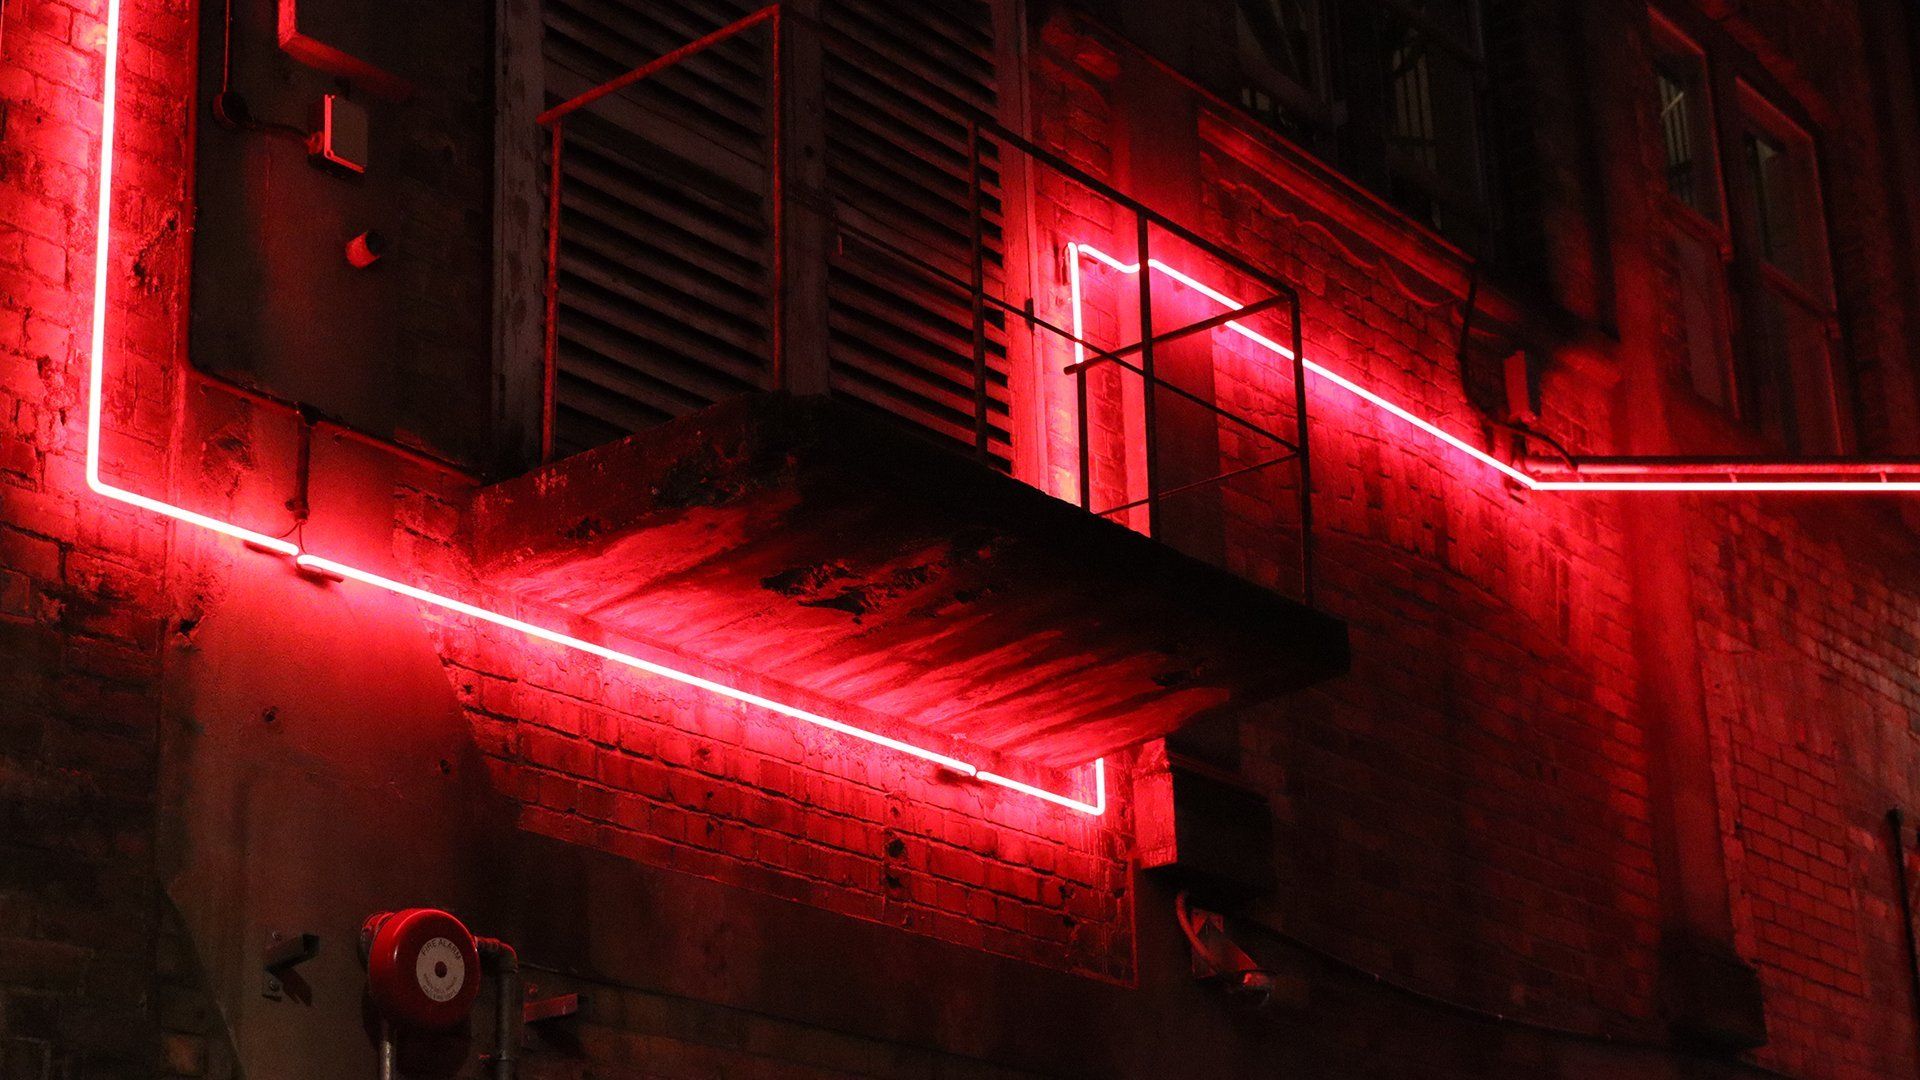 Urban scene with red lighting